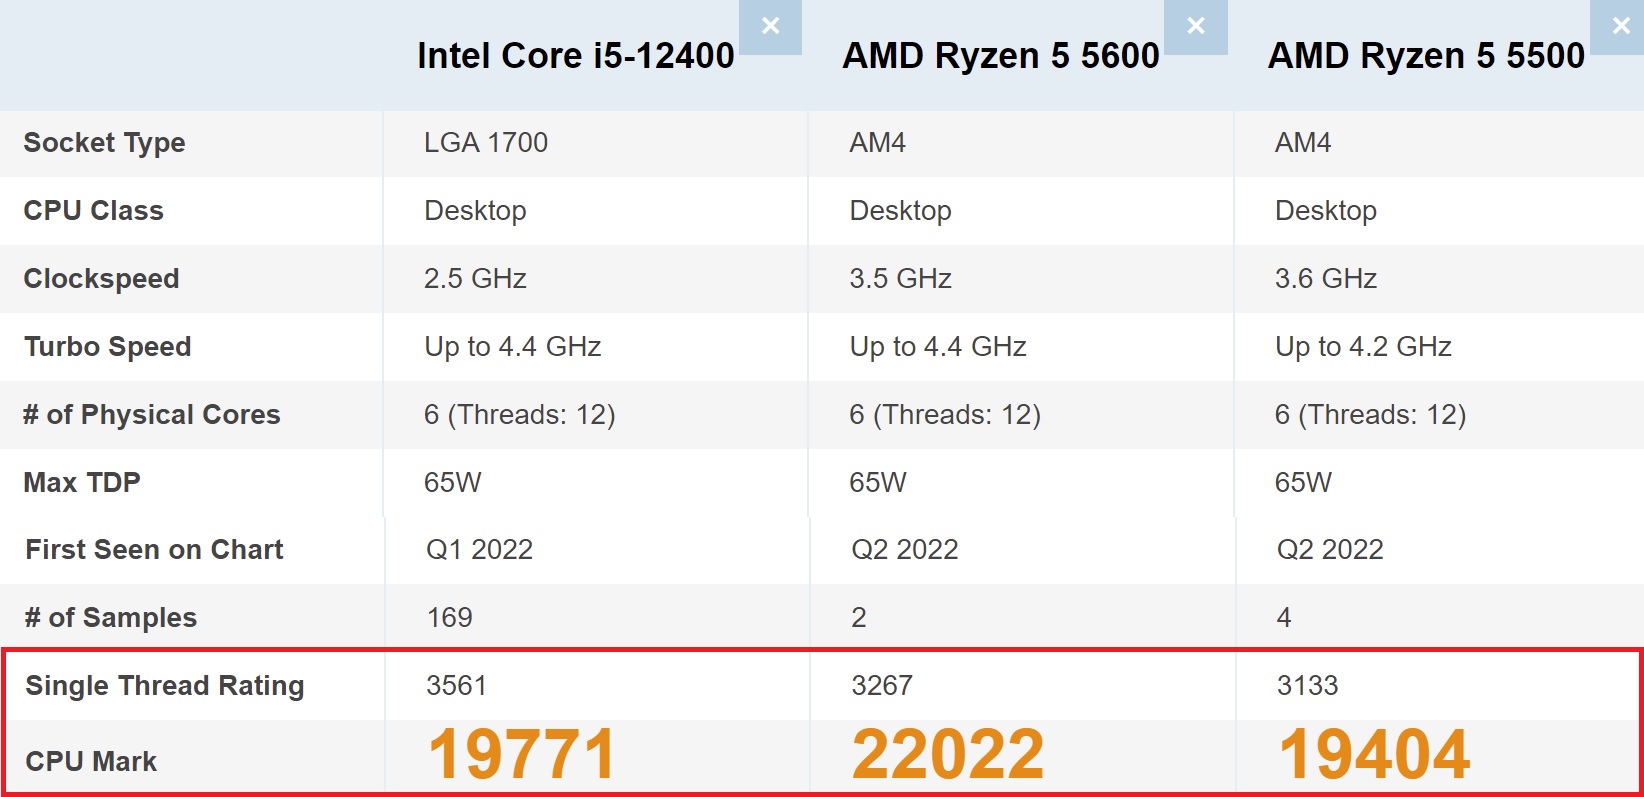 AMD Ryzen 5 5600 and 5500 Gaming Benchmarks - AMD Ryzen 5 5600 and